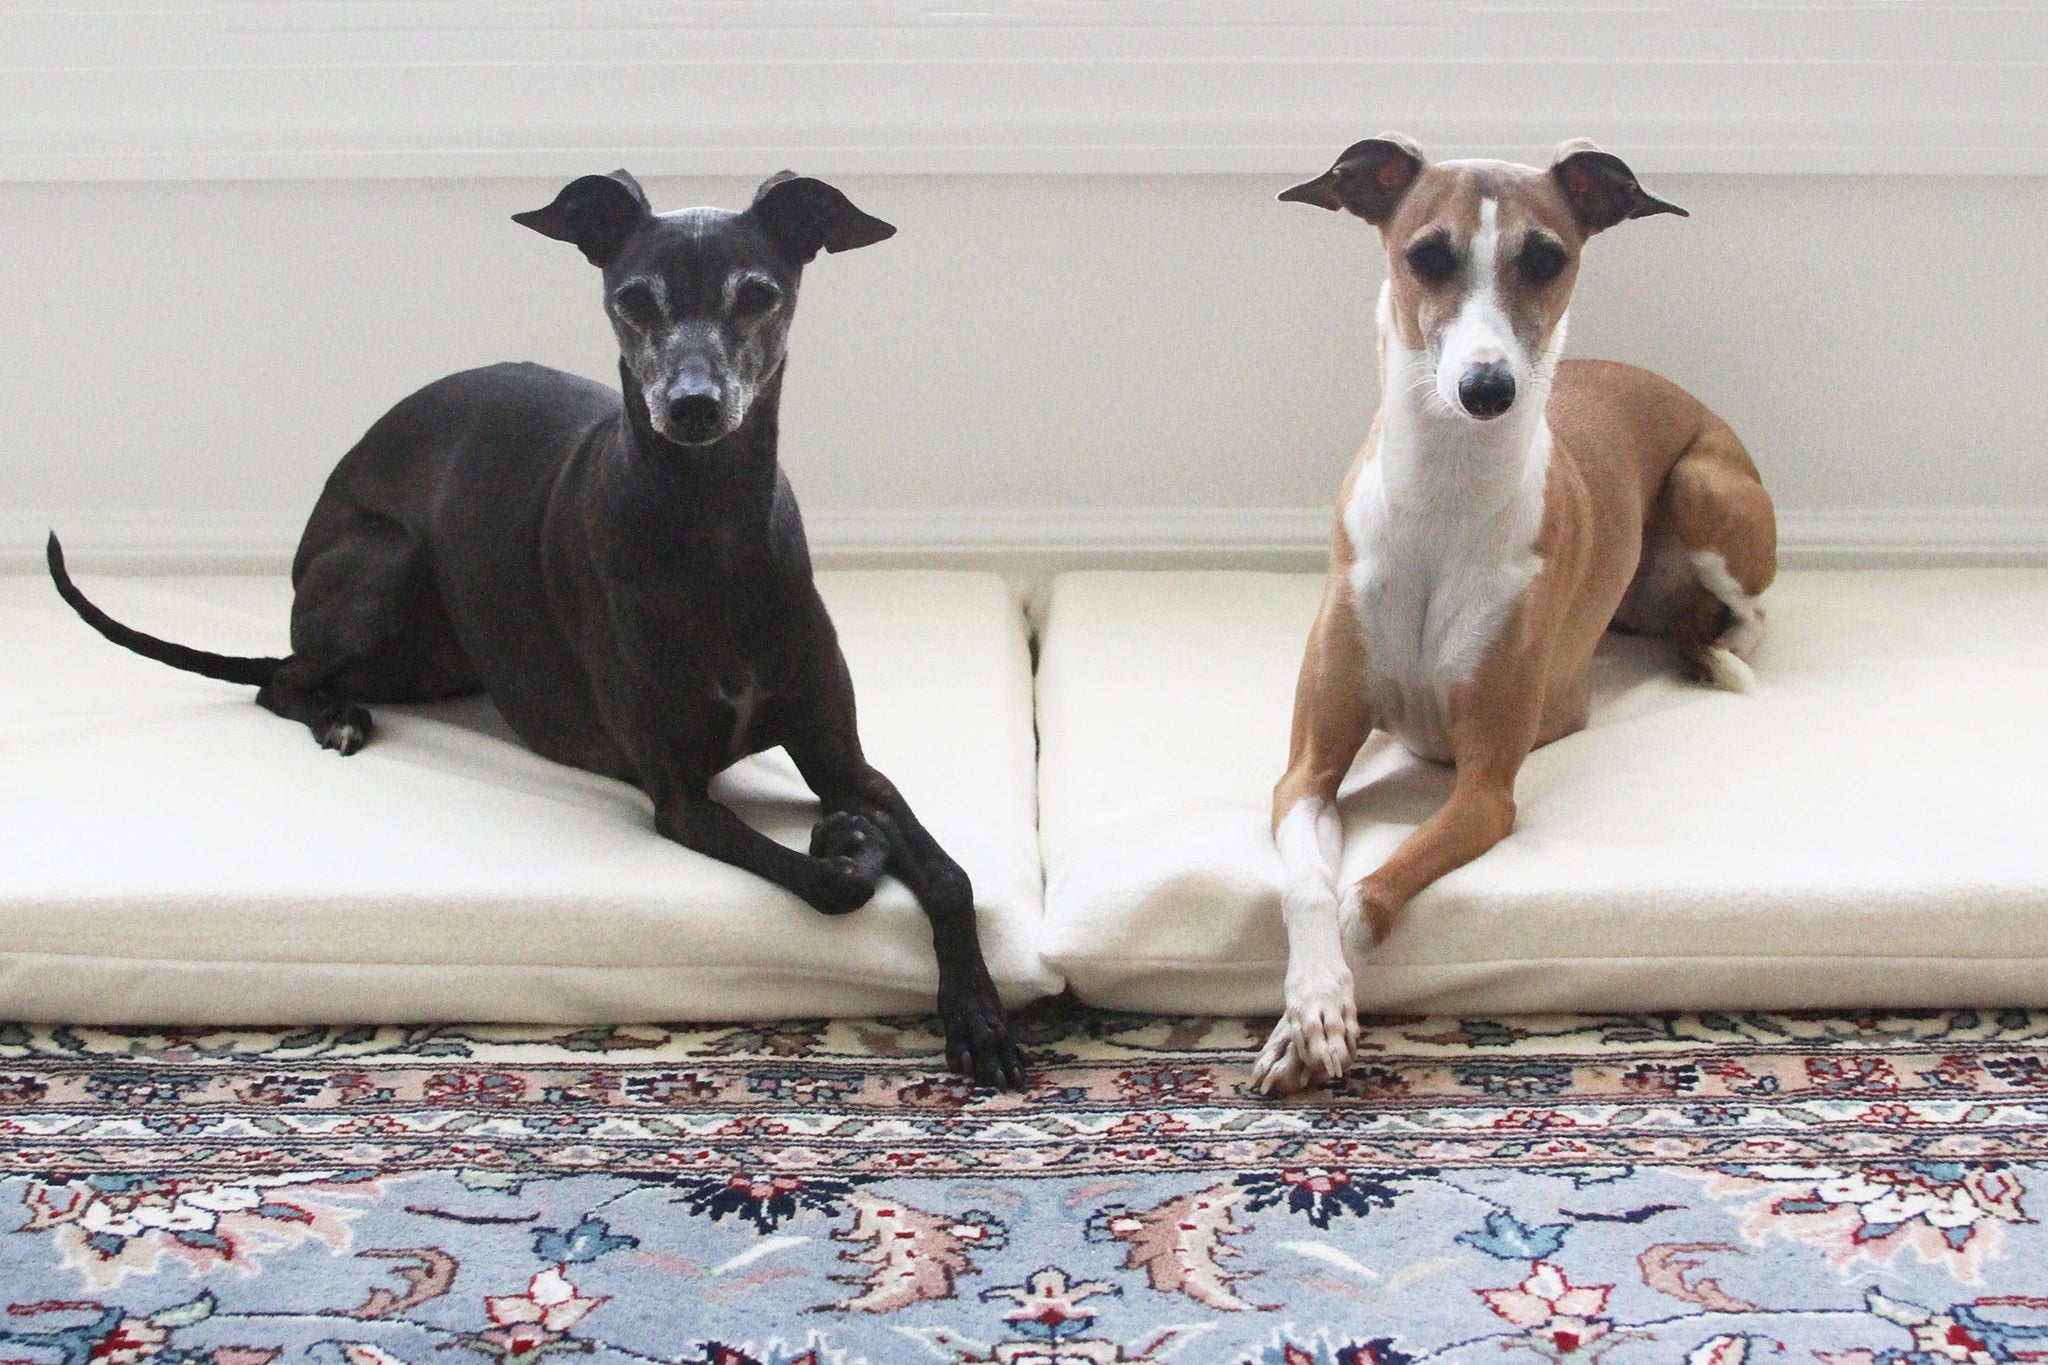 Black dog and red dog on beige mats, looking alert